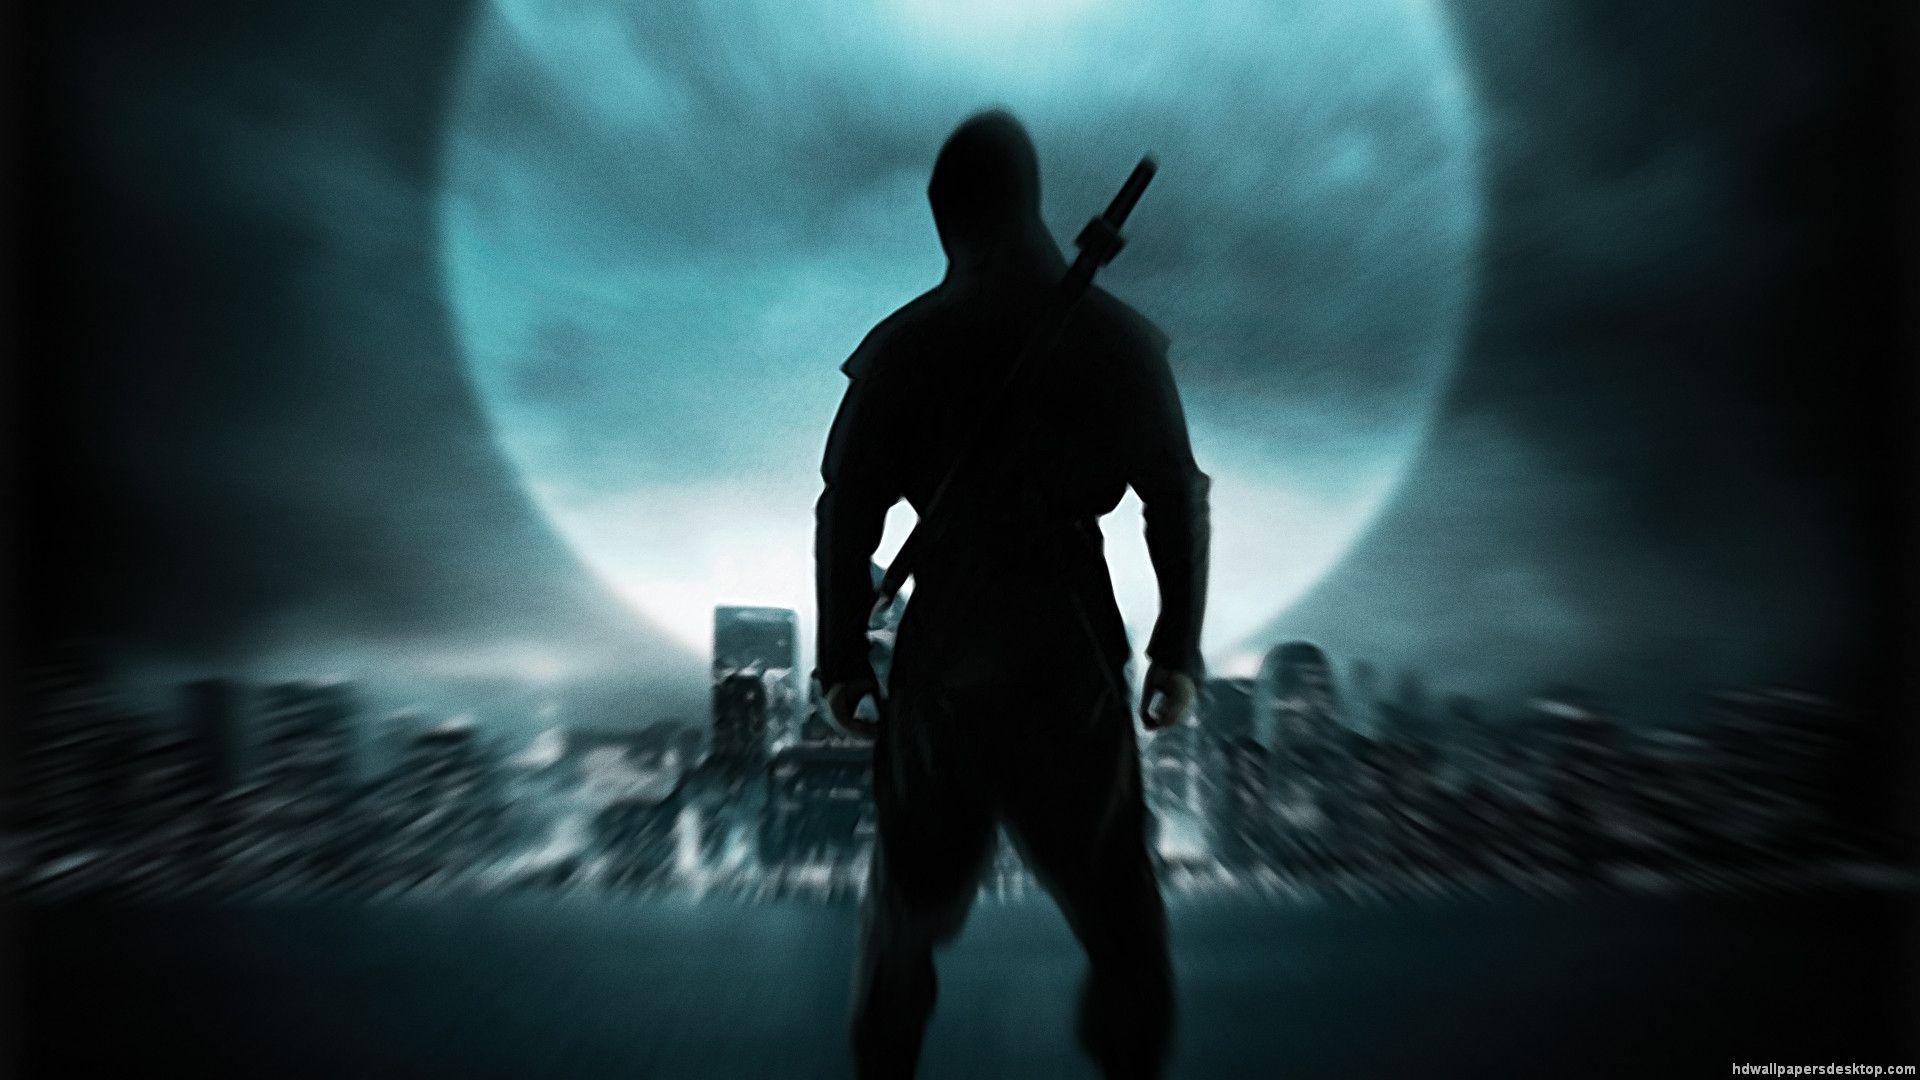 Ninja Assassin Screensaver for Windows - Screensavers Planet